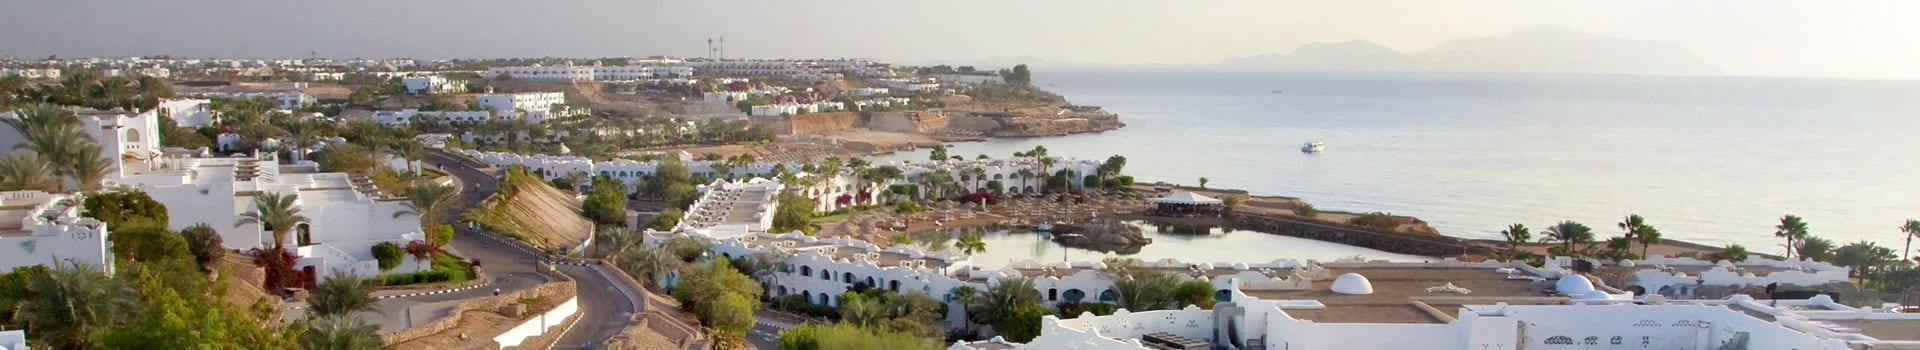 Colónia - Sharm el sheikh